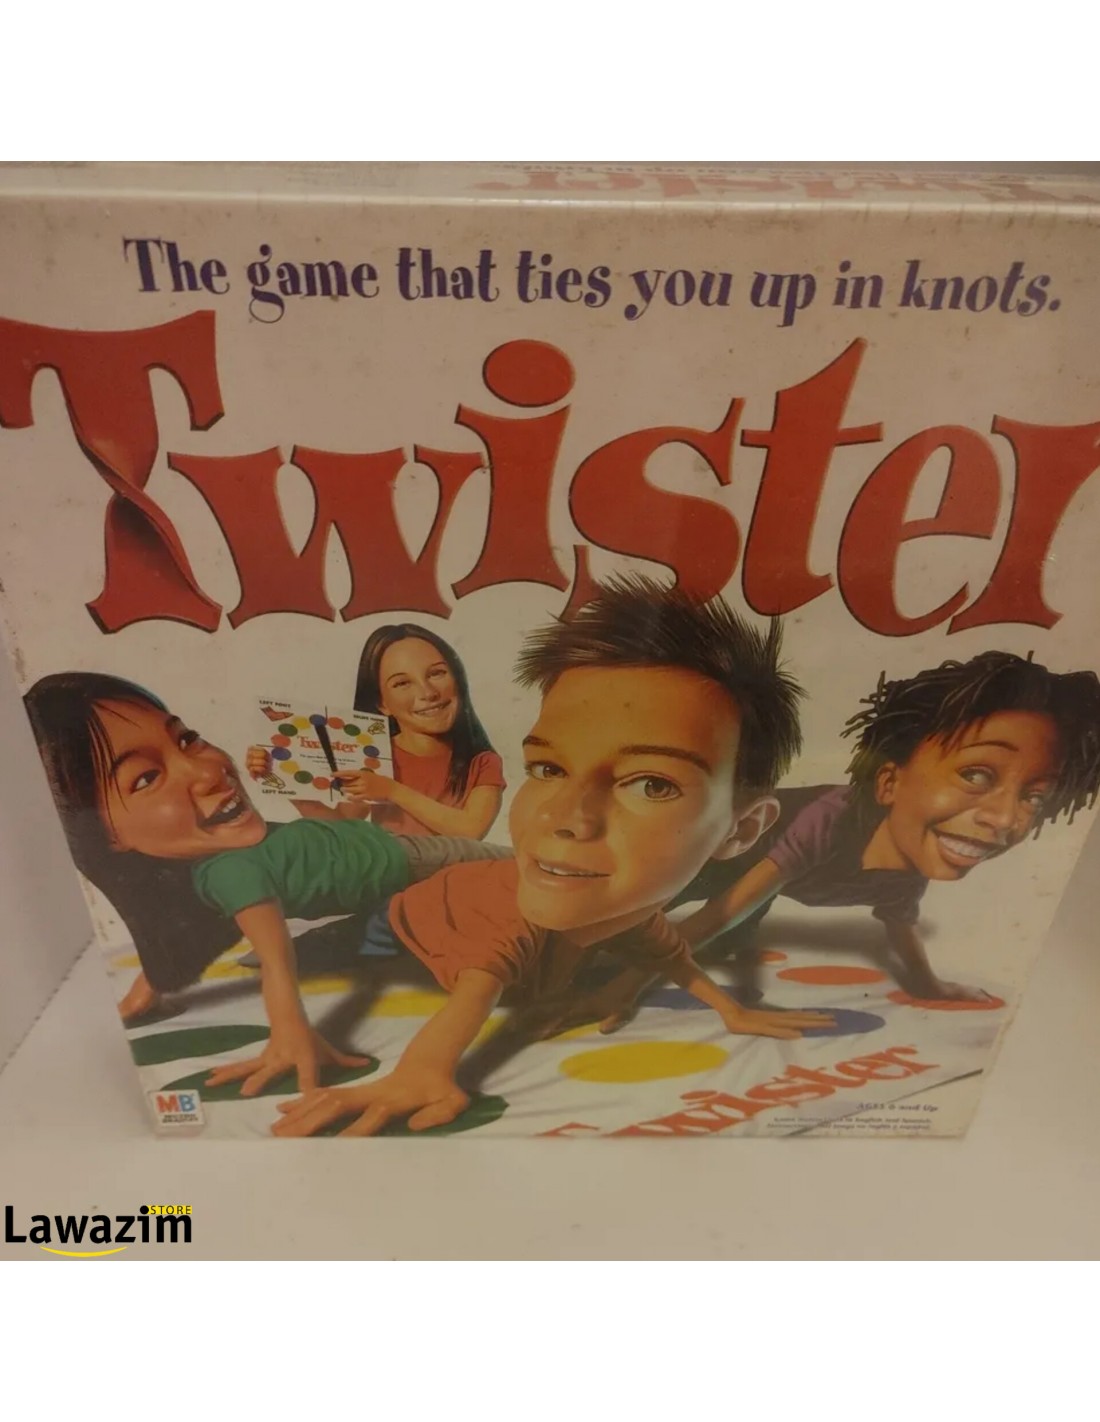 Le jeu Twister!